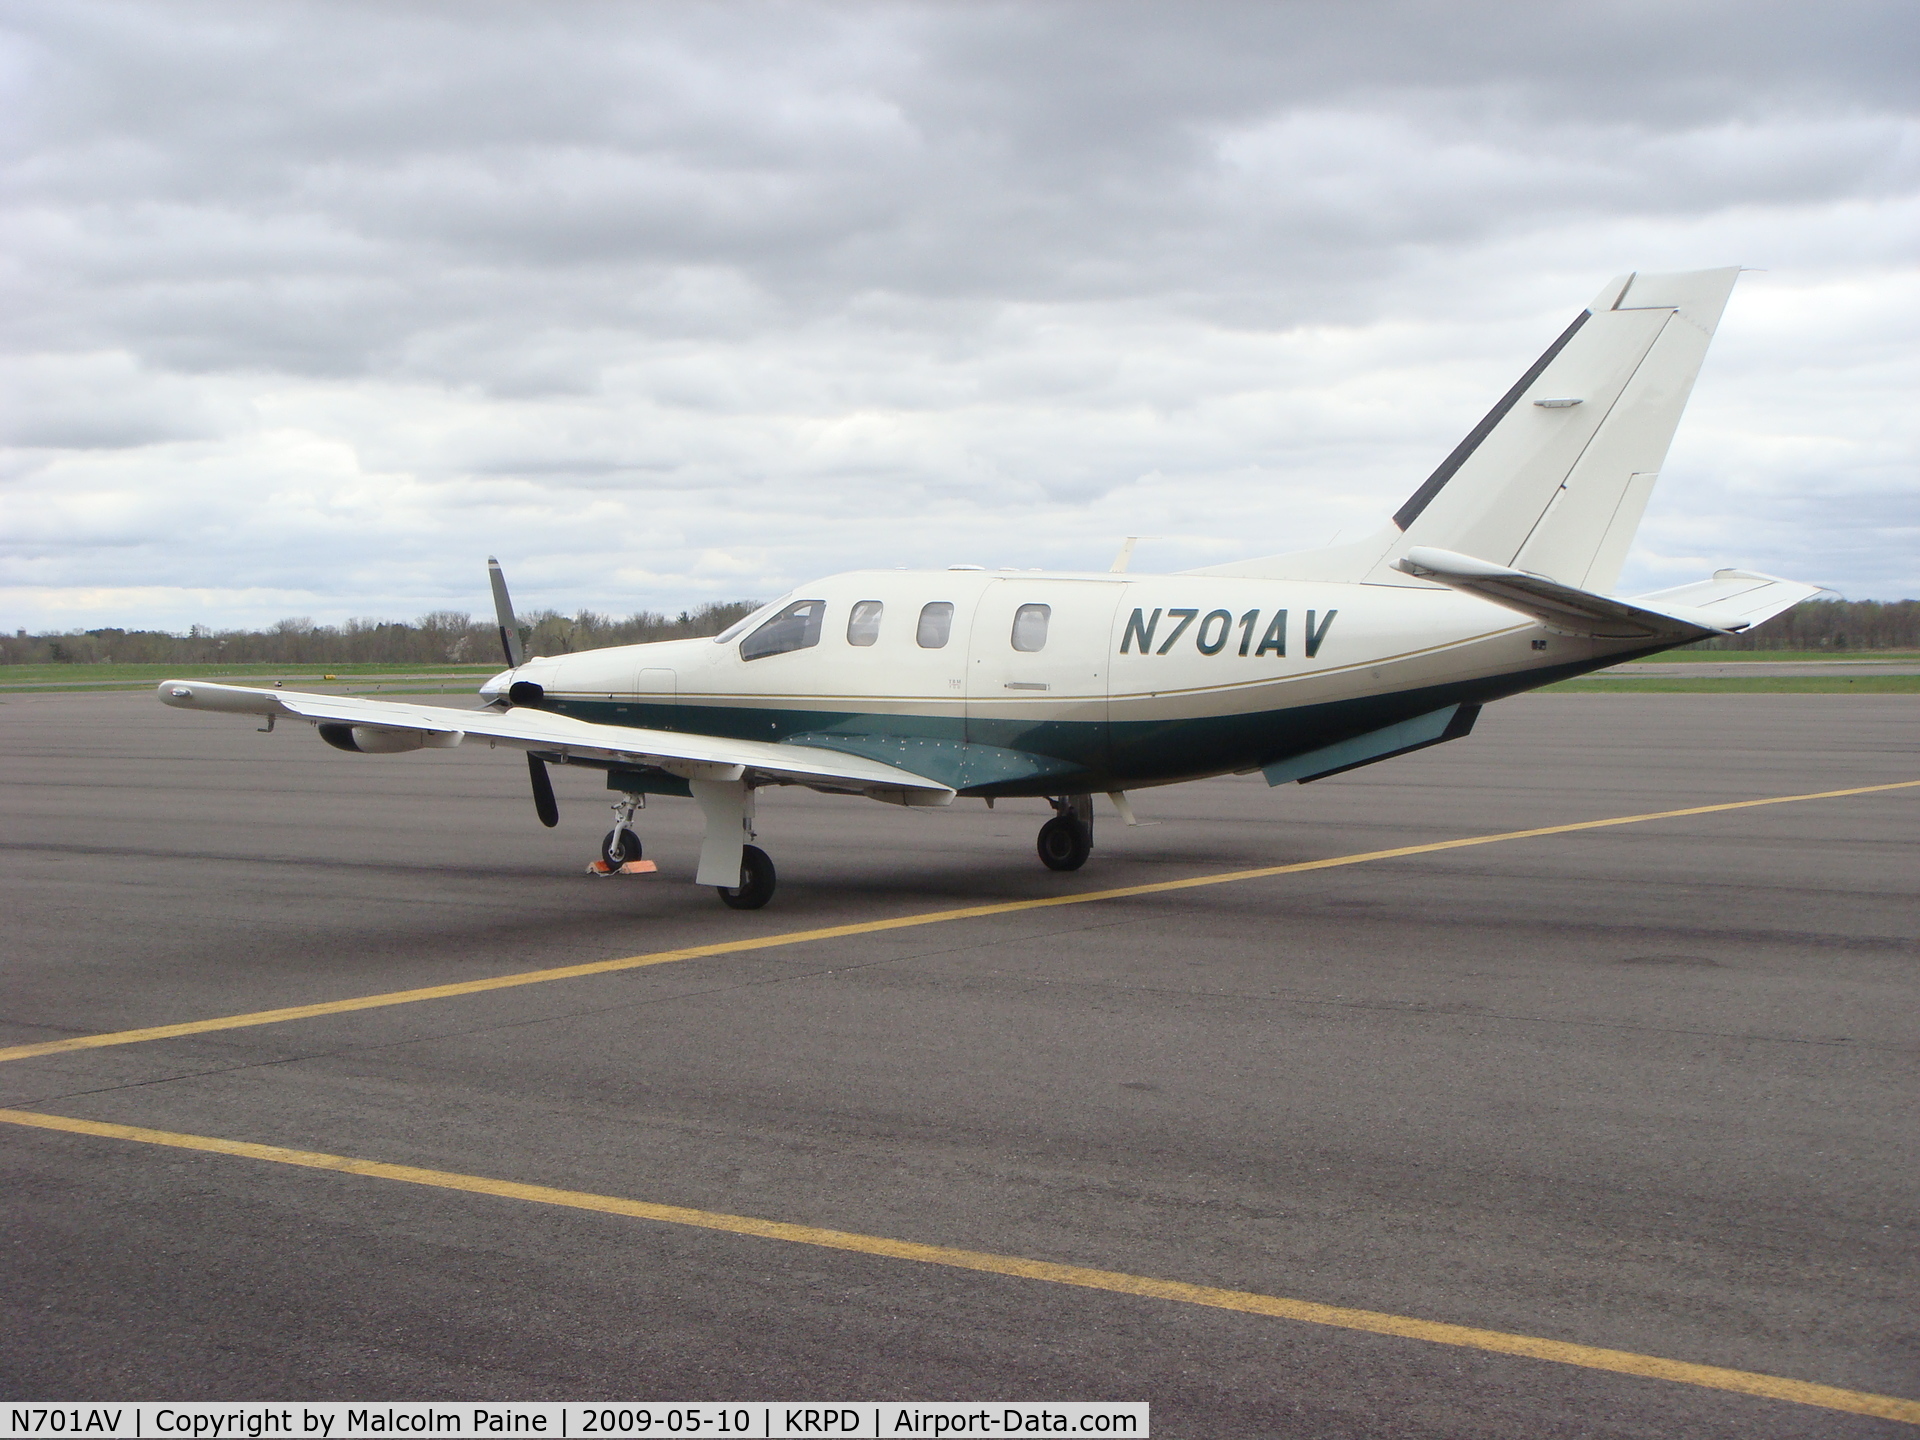 N701AV, 2000 Socata TBM-700 C/N 179, Parked in front of terminal at Rice Lake Regional Airport